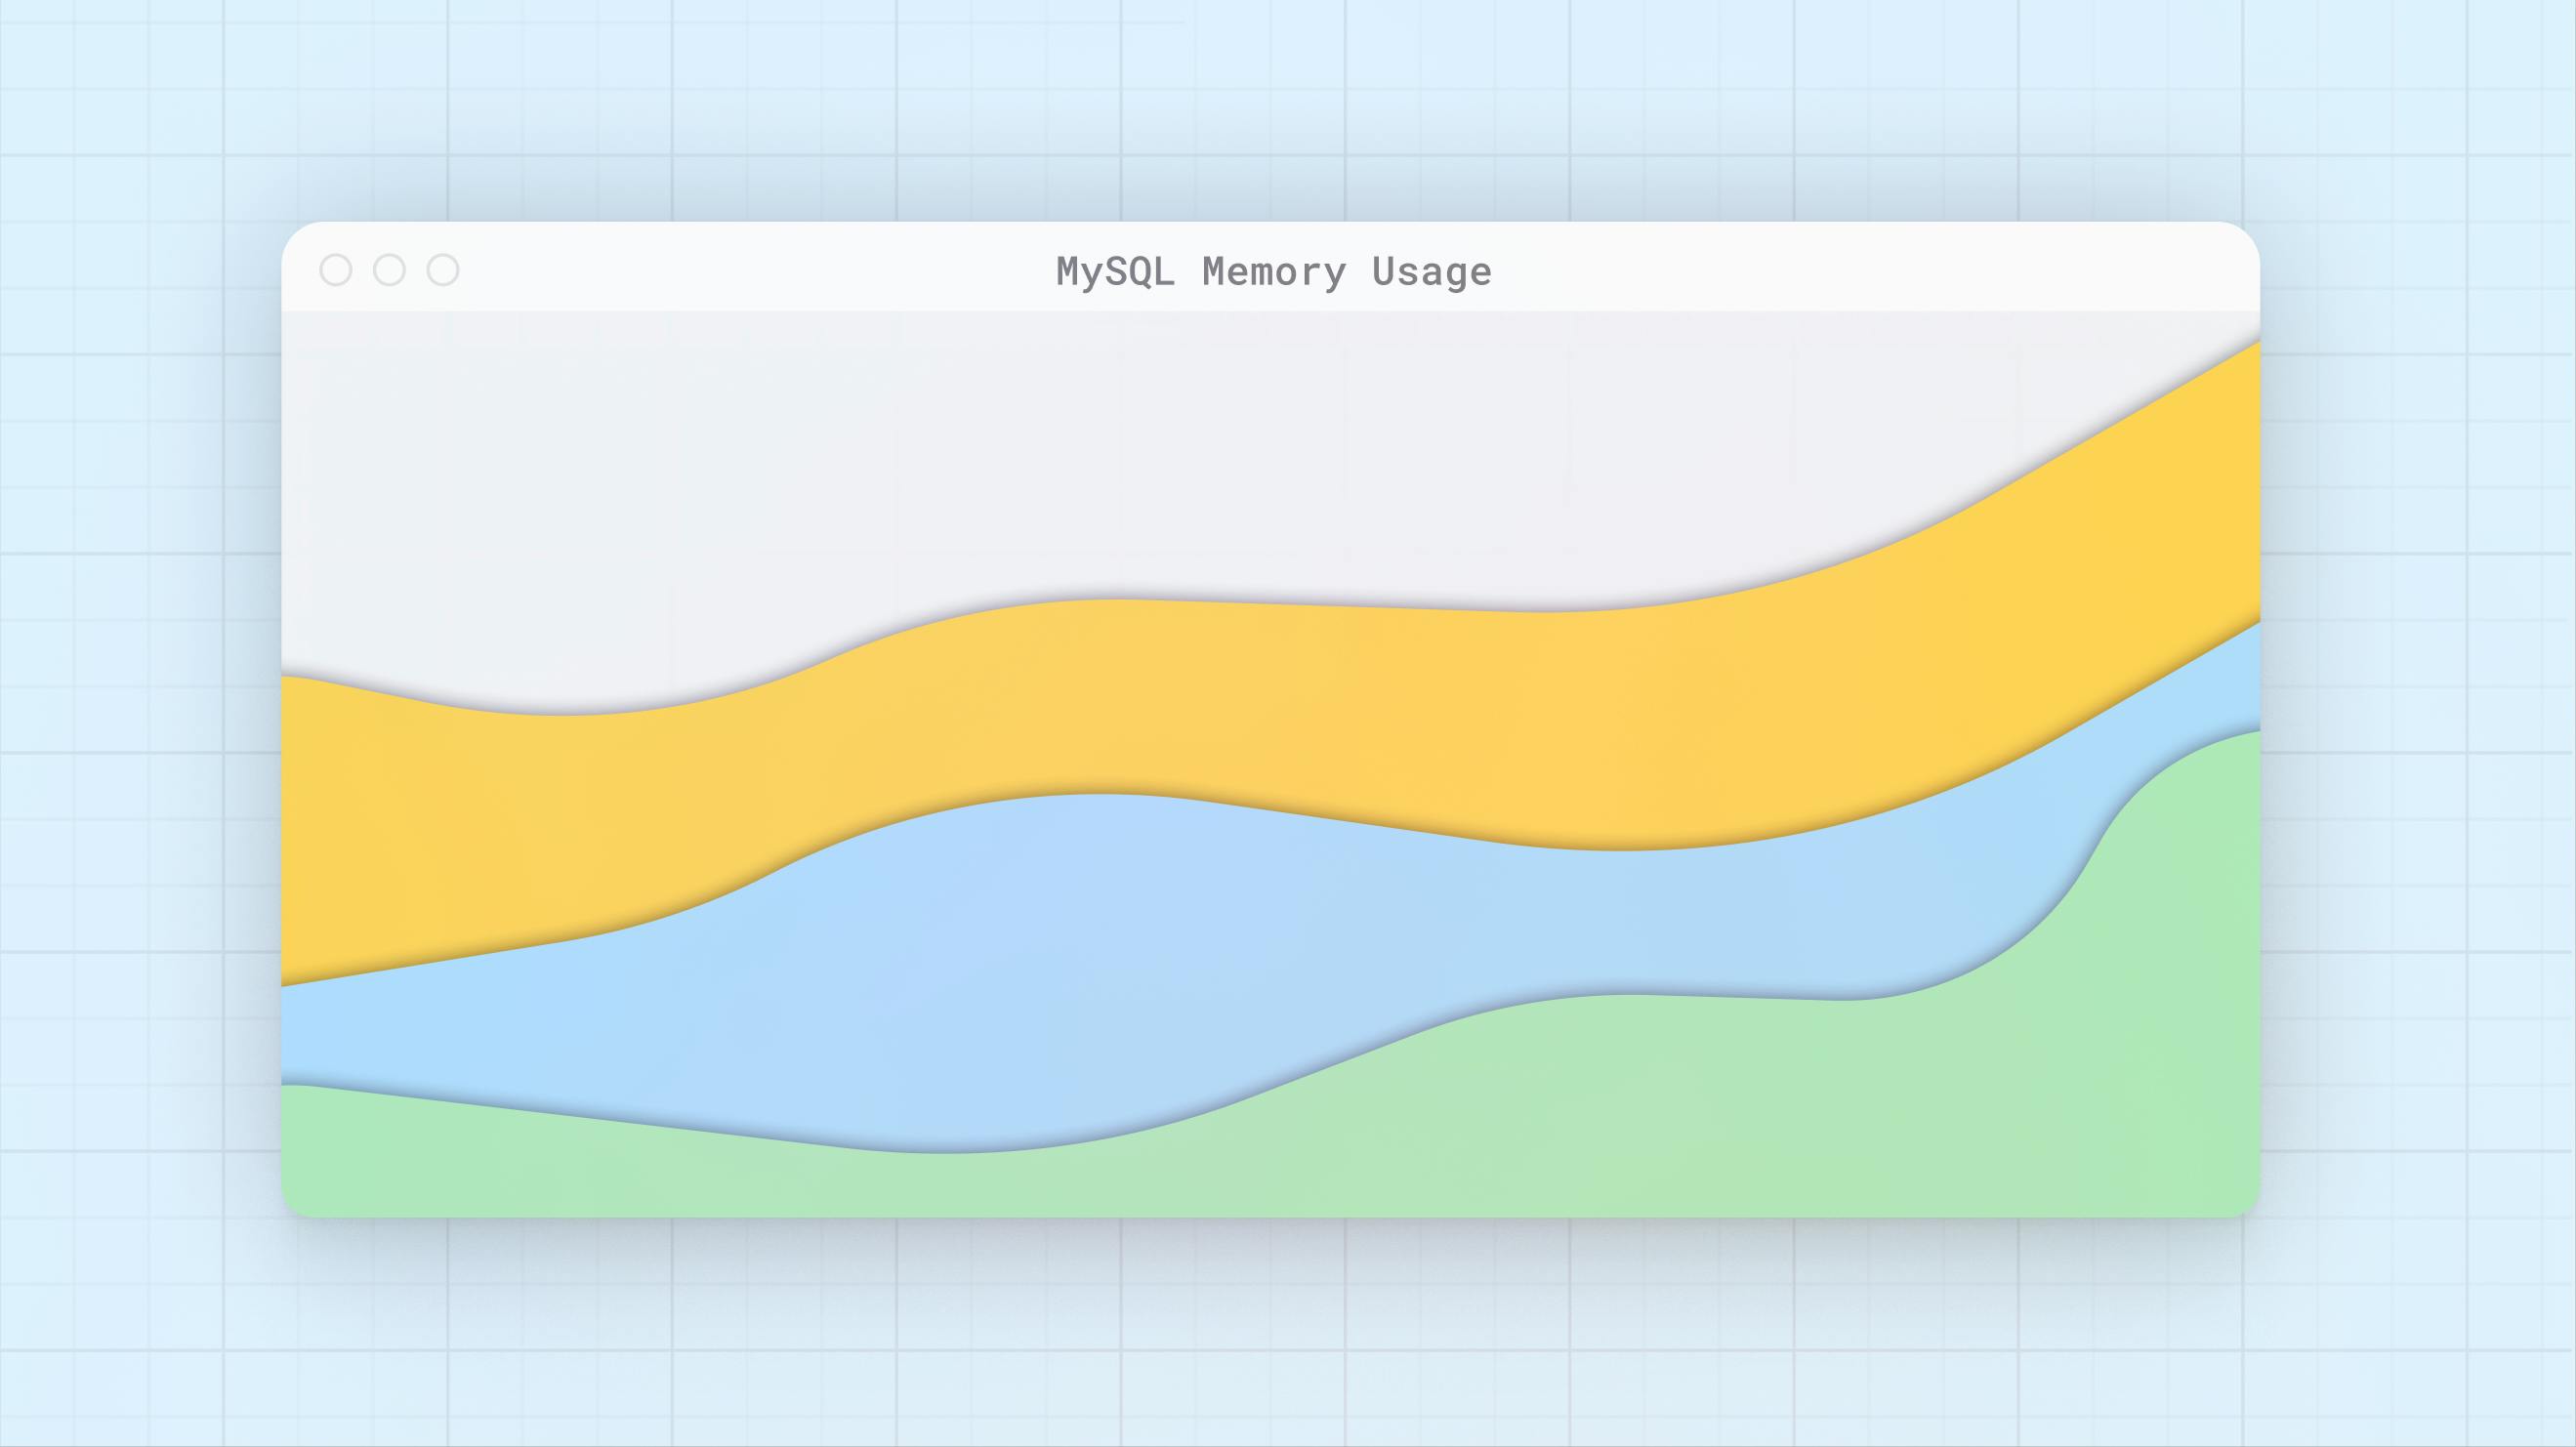 Profiling memory usage in MySQL